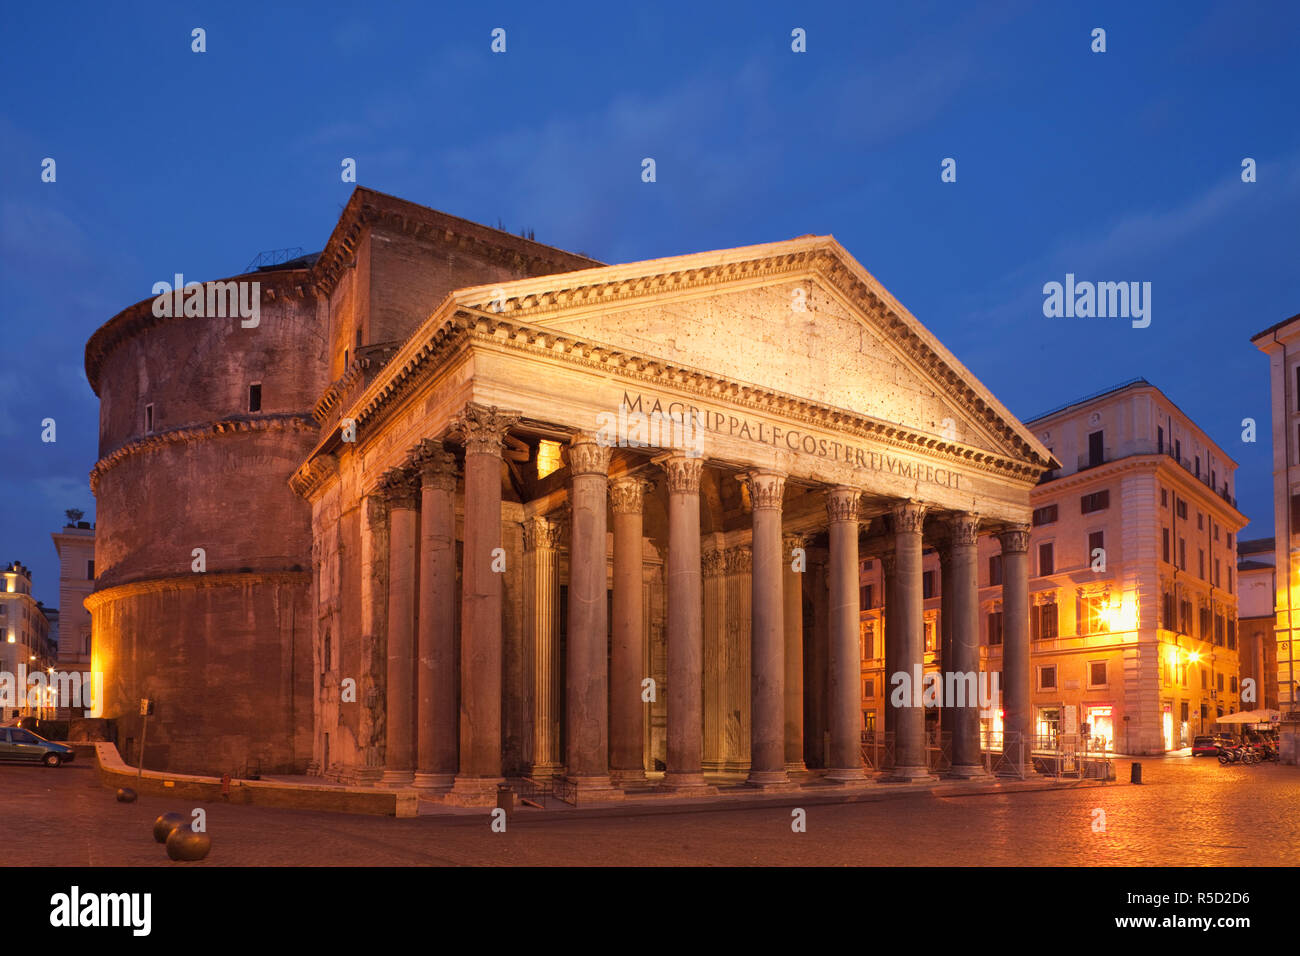 Italia, Roma, il Pantheon Foto Stock